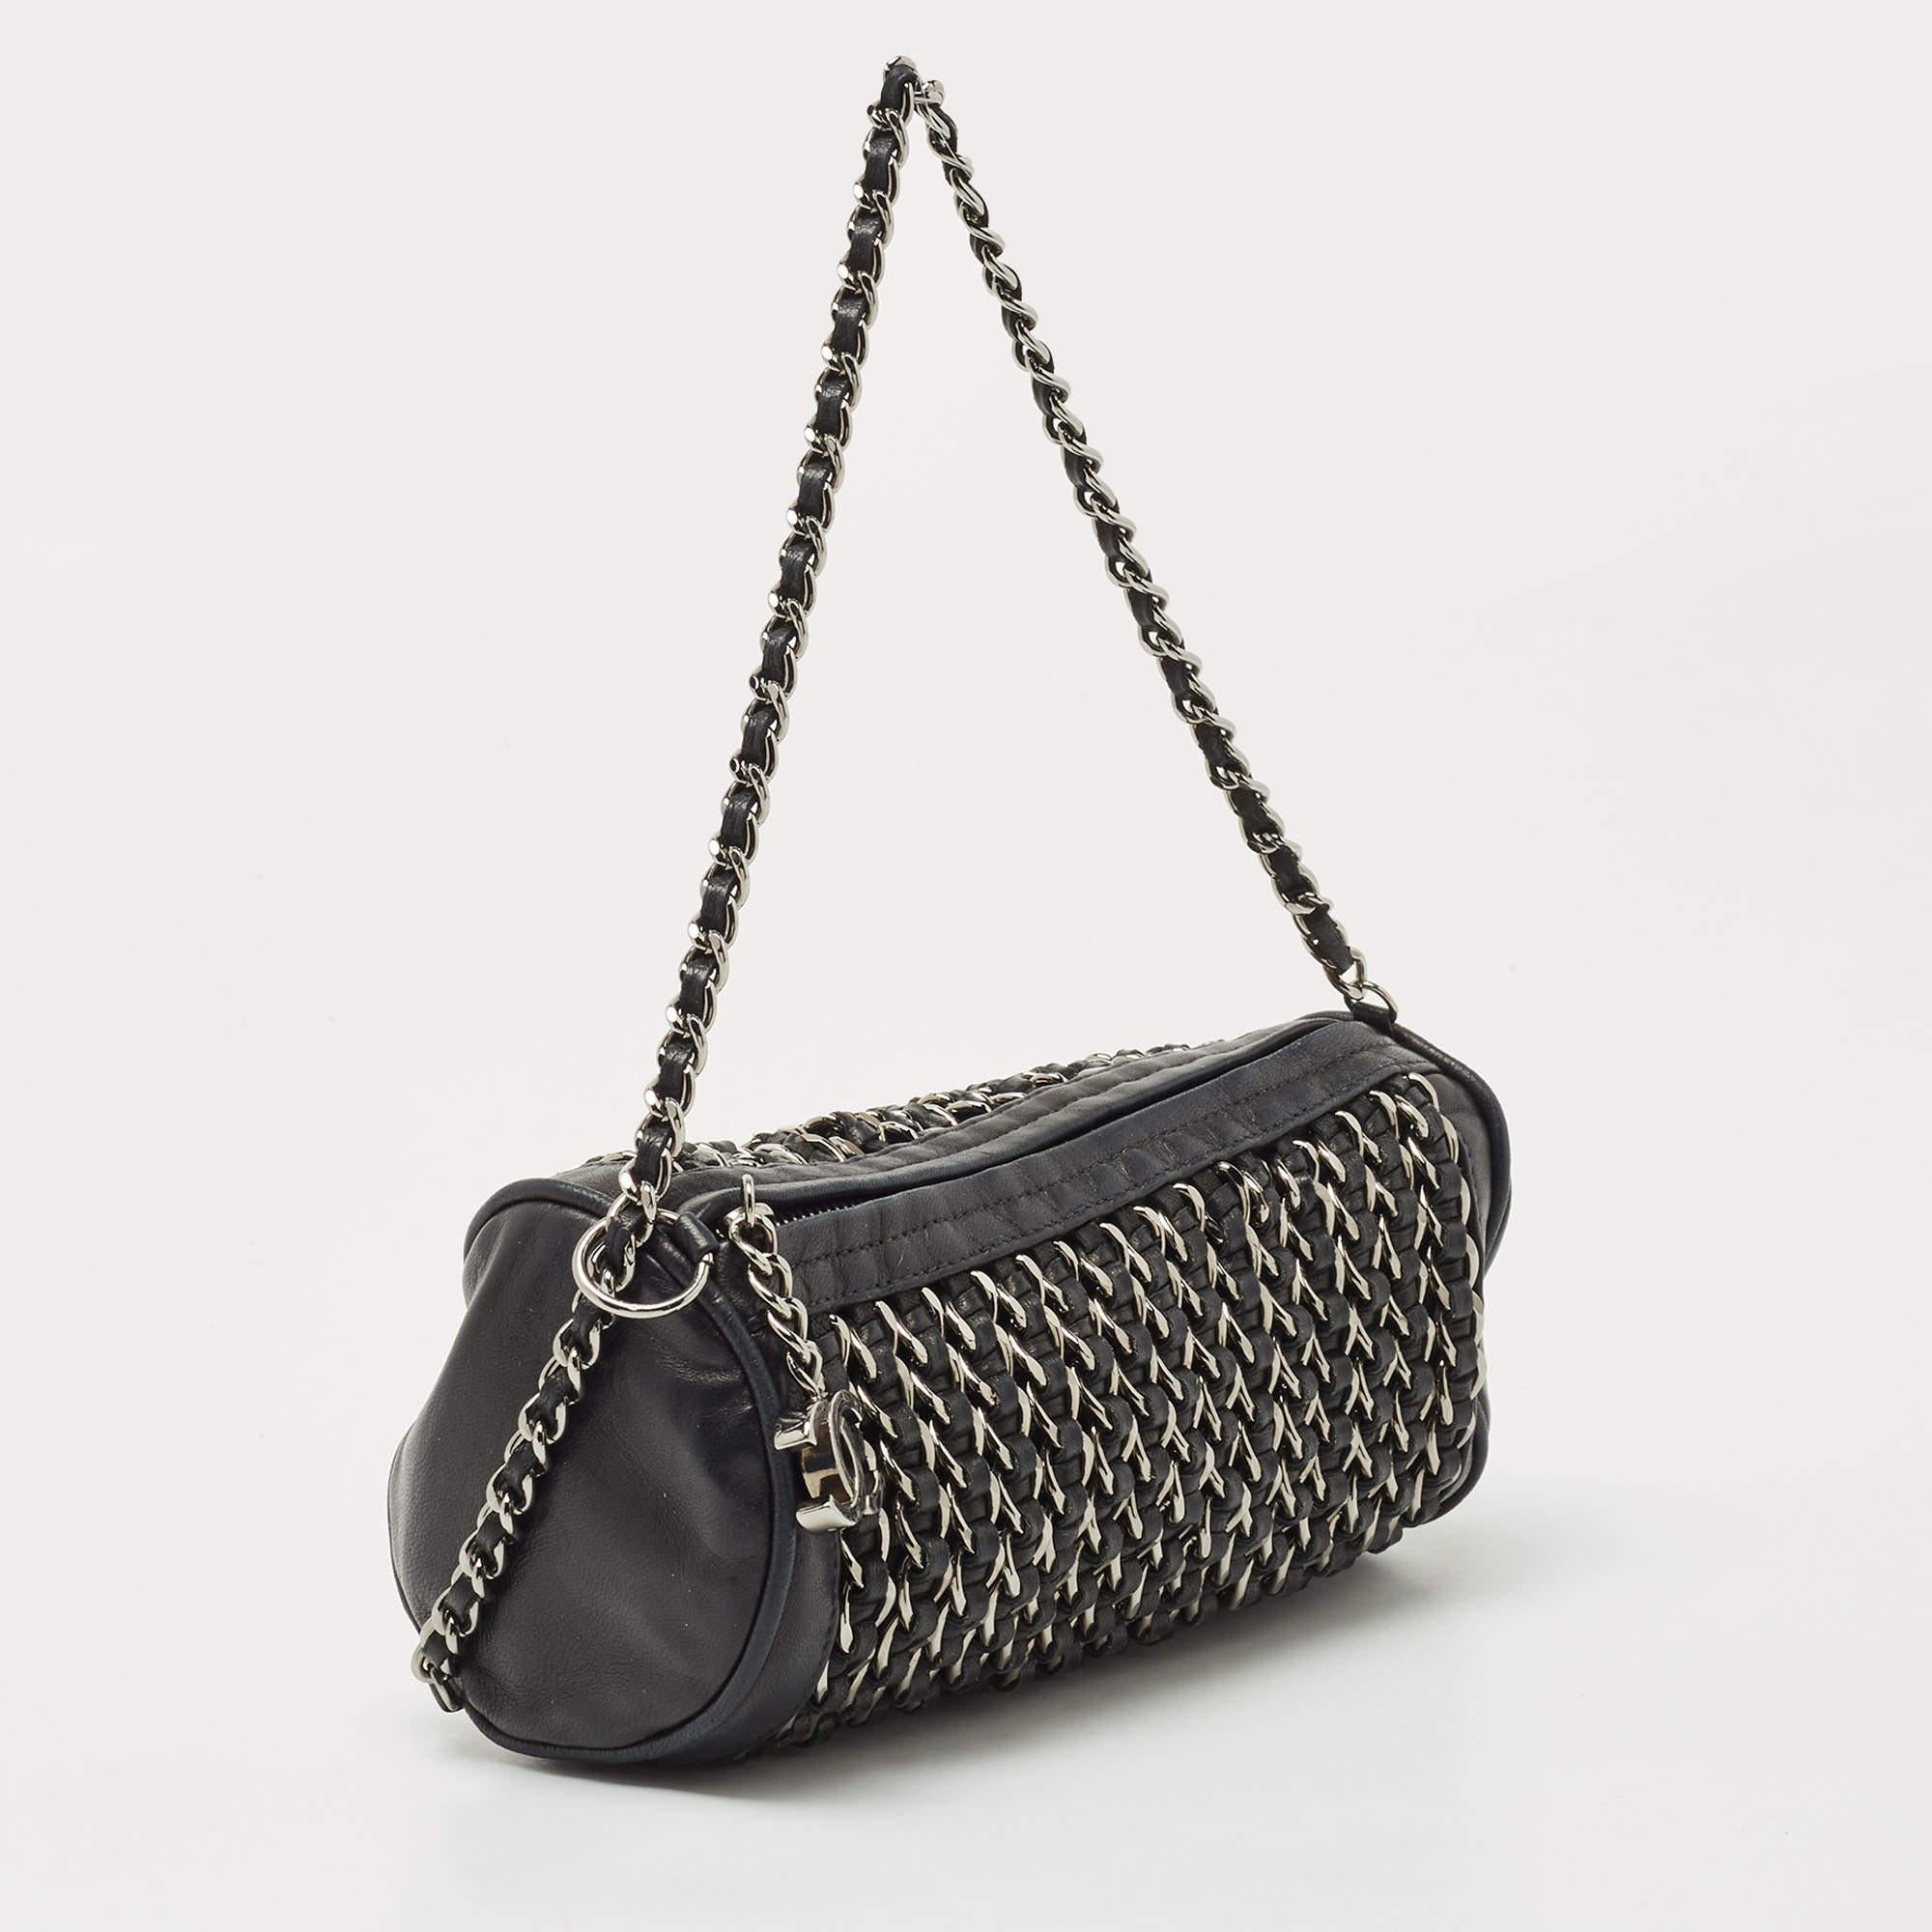 Women's Chanel Black Leather Chain Links Barrel Clutch Bag